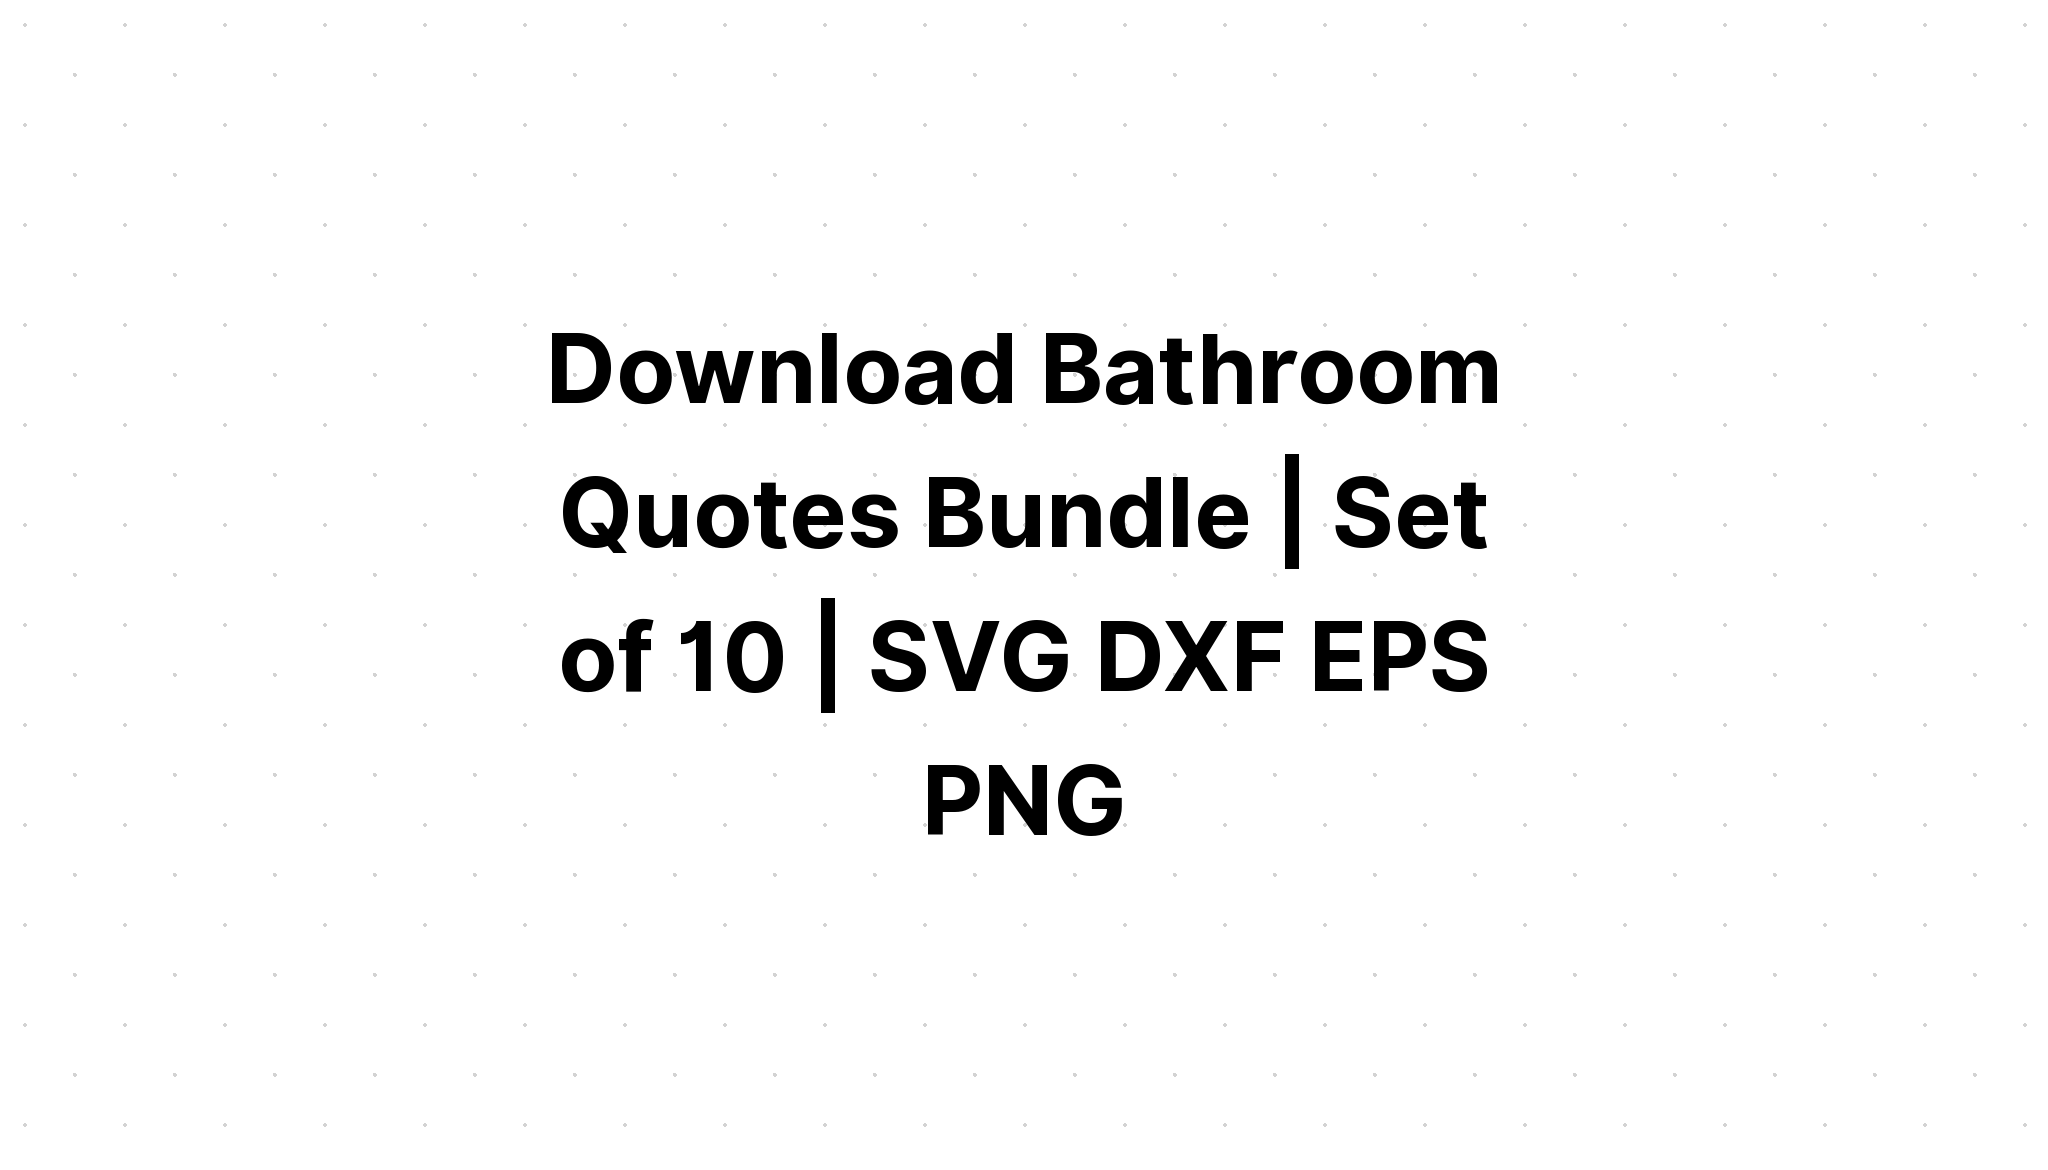 Download Bathroom Quotes Bundle SVG File